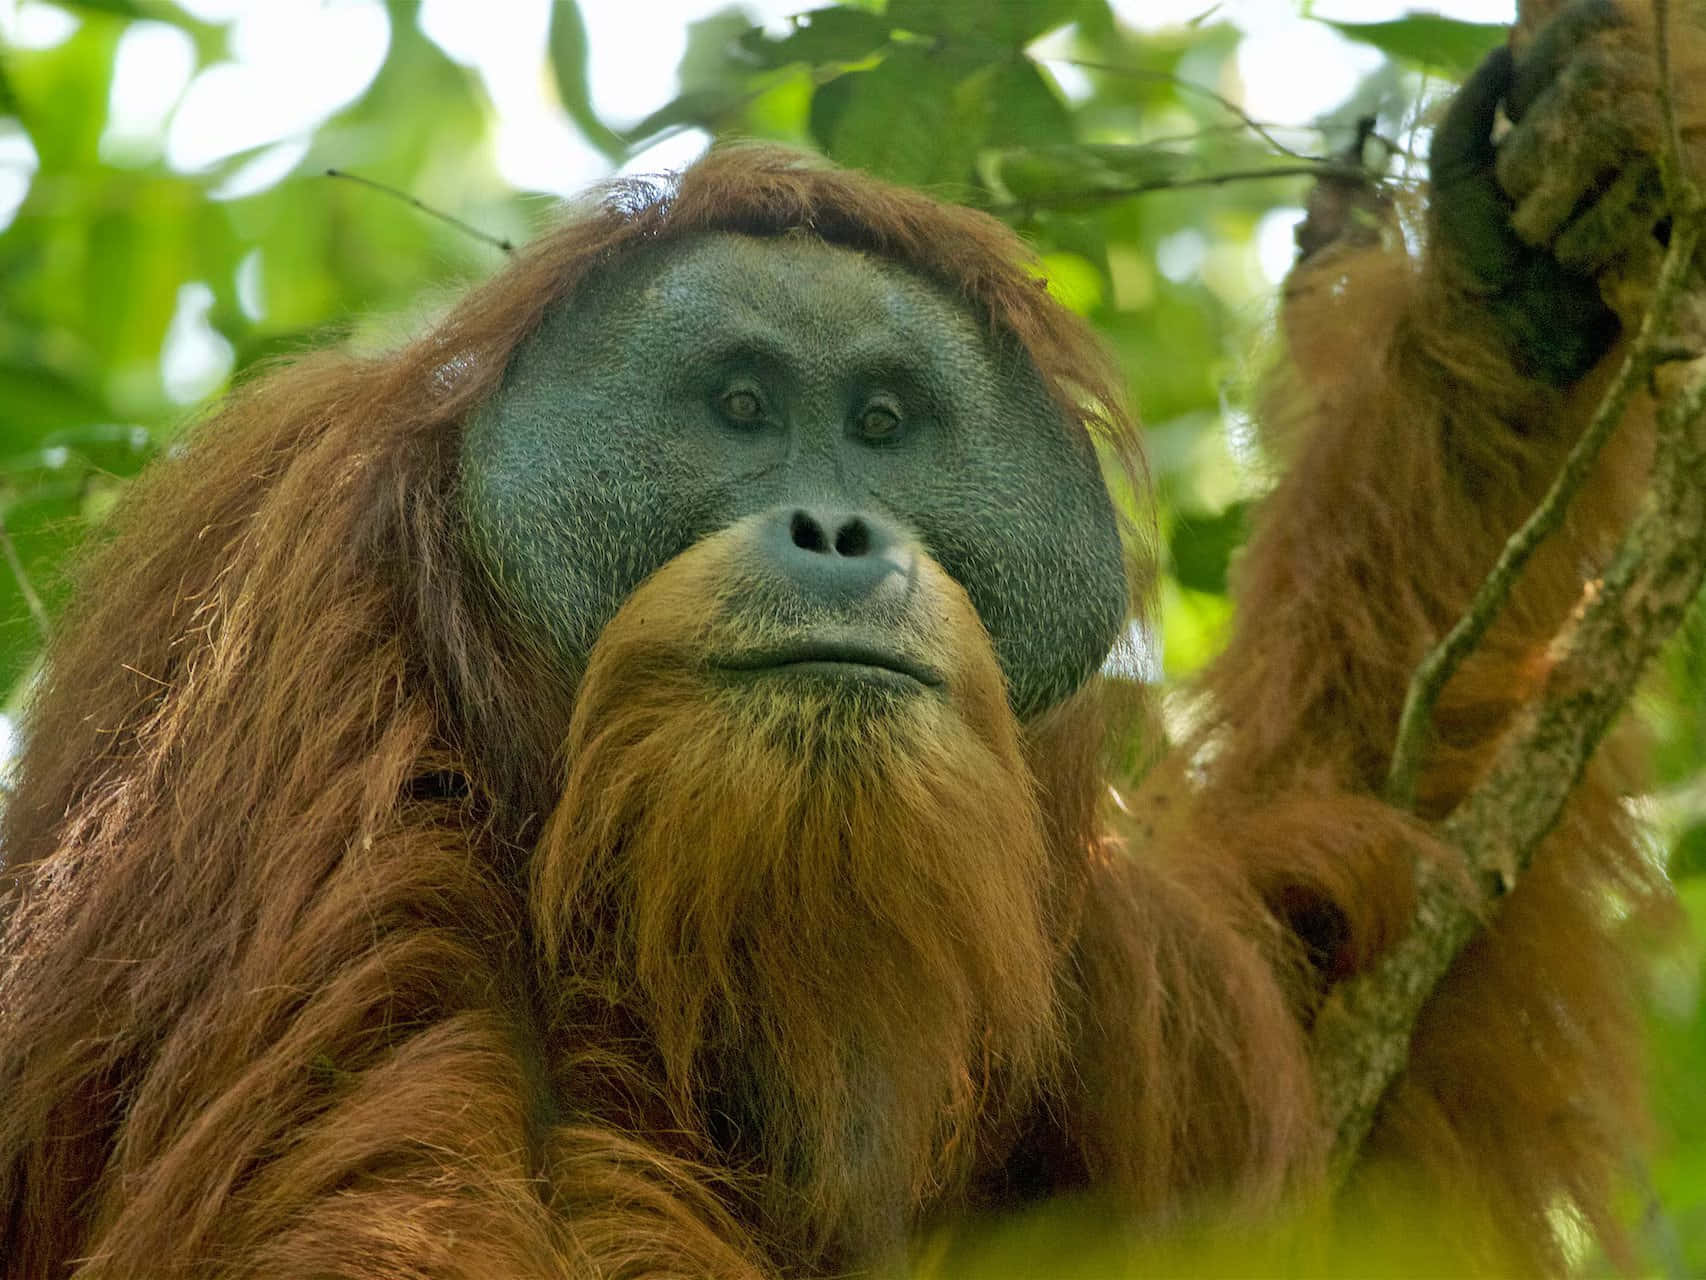 A Gorgeous Orangutan Sitting On A Tree Branch